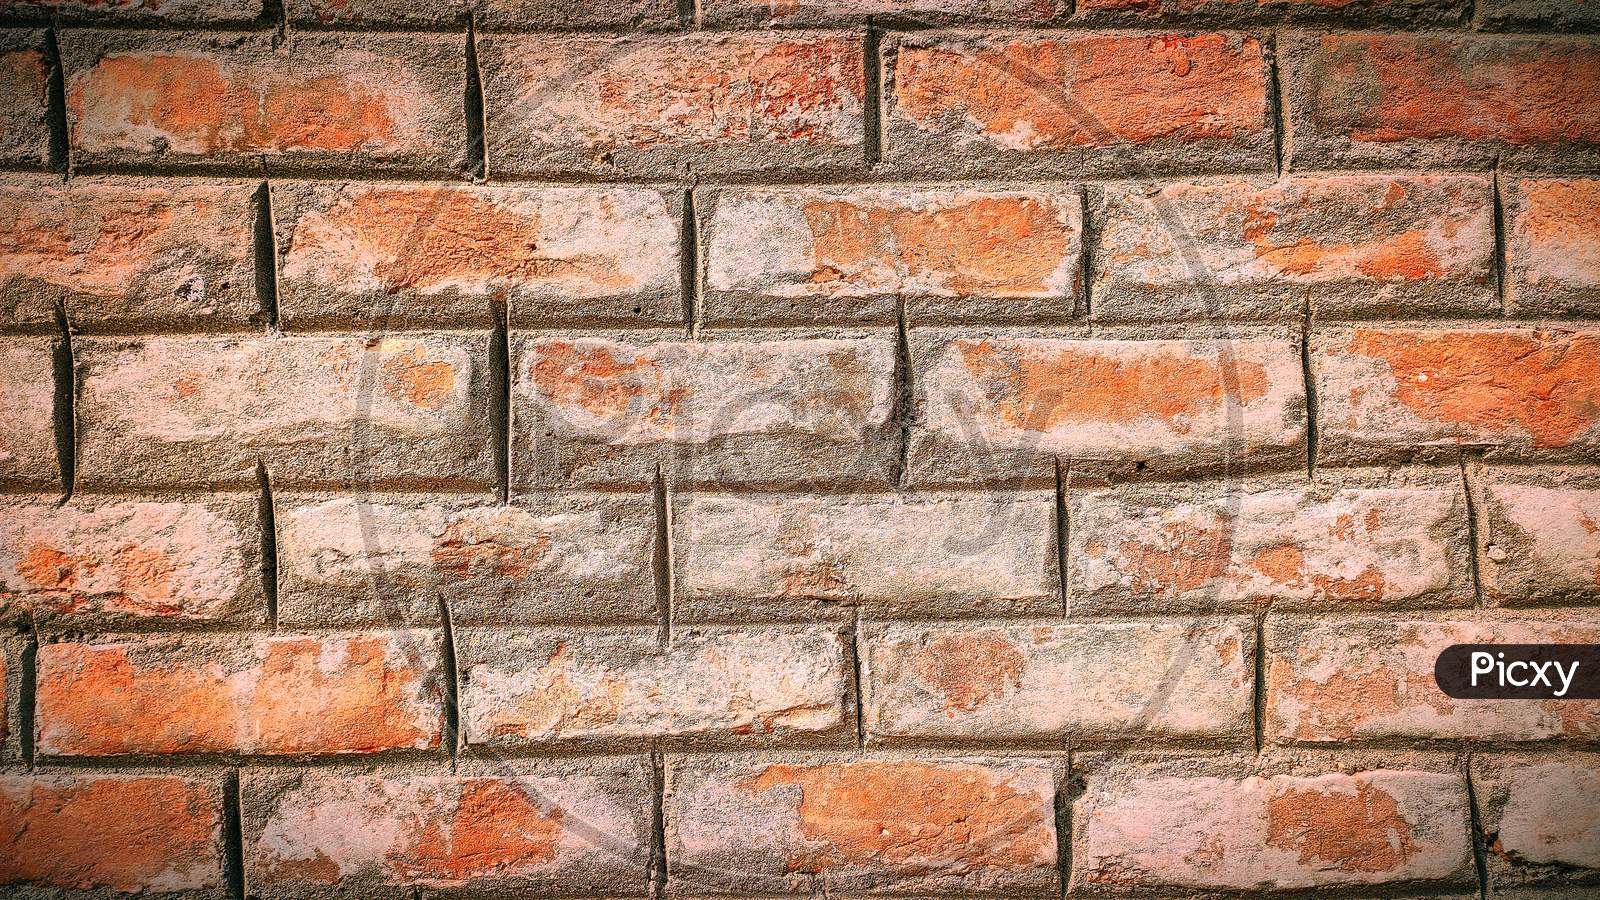 Stone wall made of bricks.